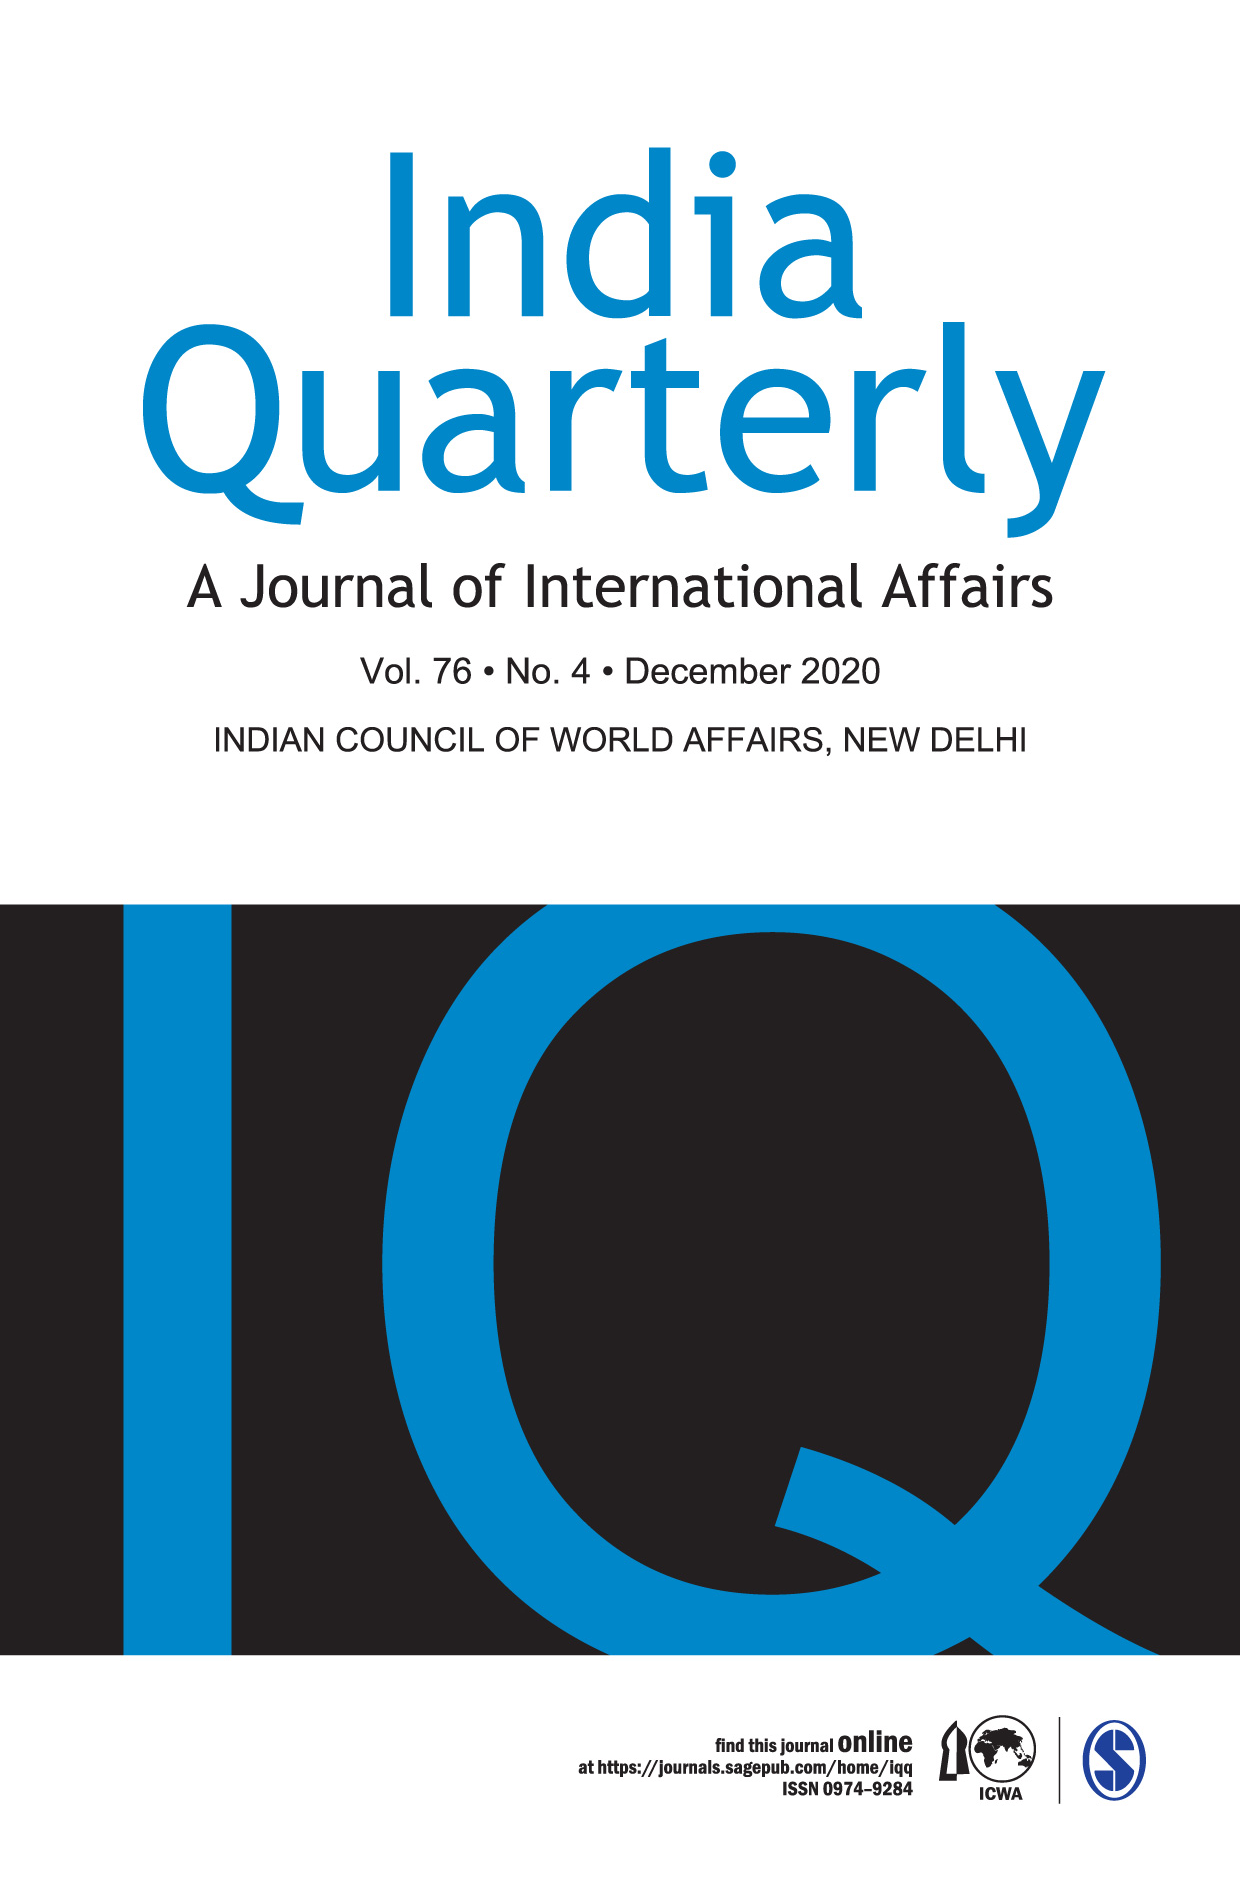 India Quarterly: A Journal of International Affairs